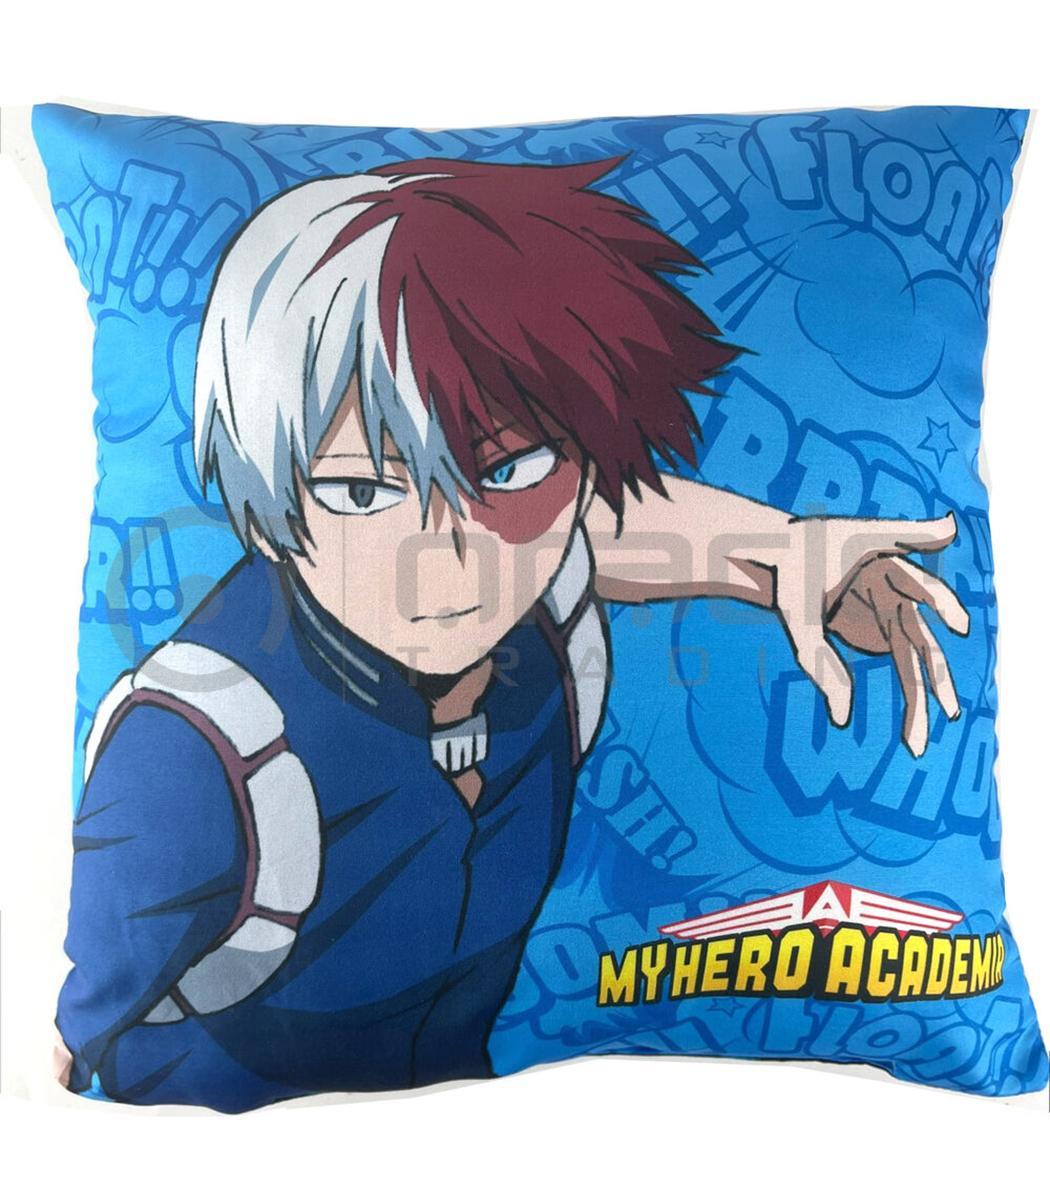 My Hero Academia Cushion - A